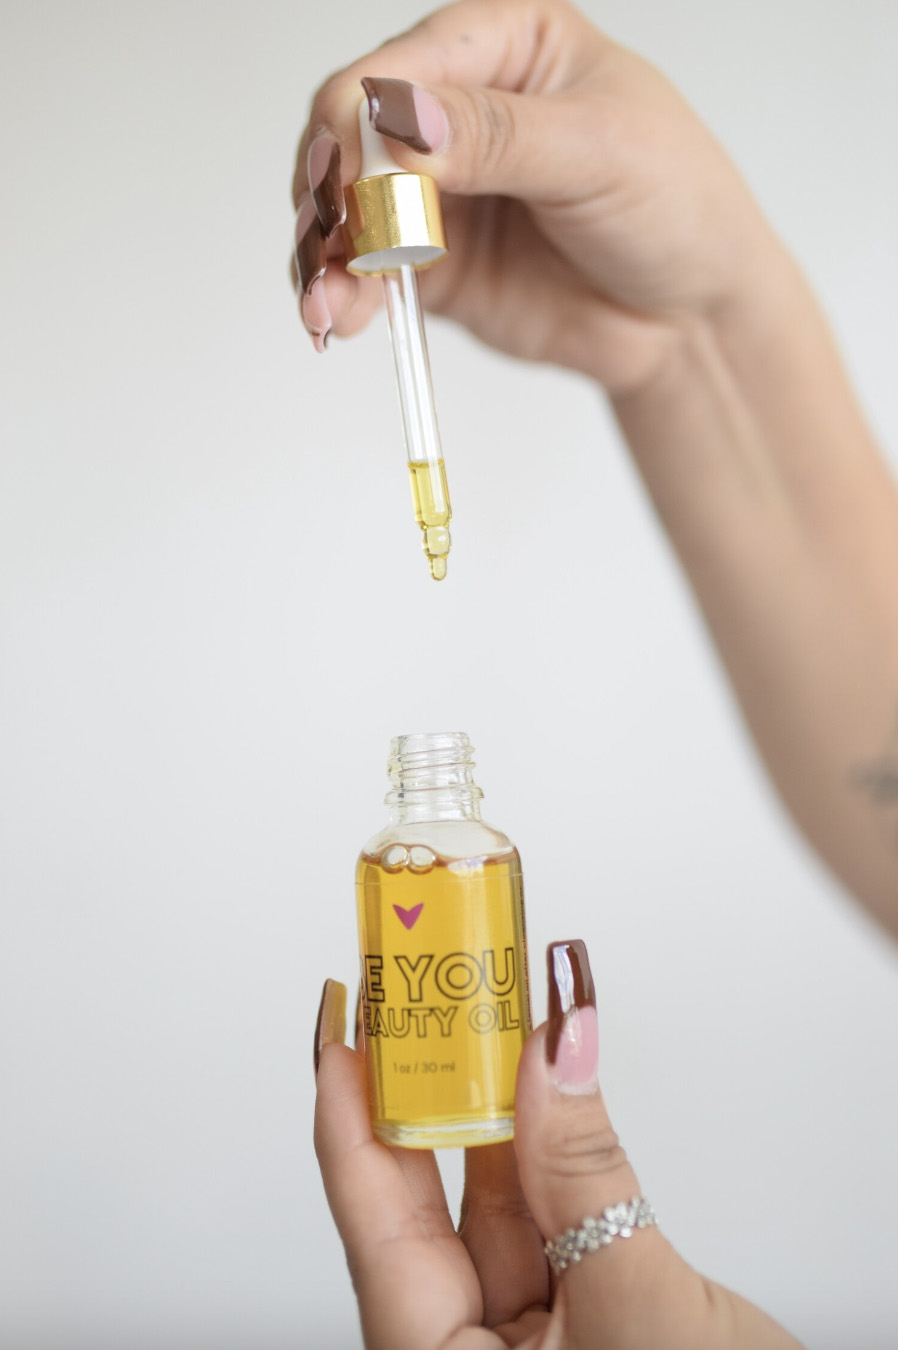 Liplove beauty oil